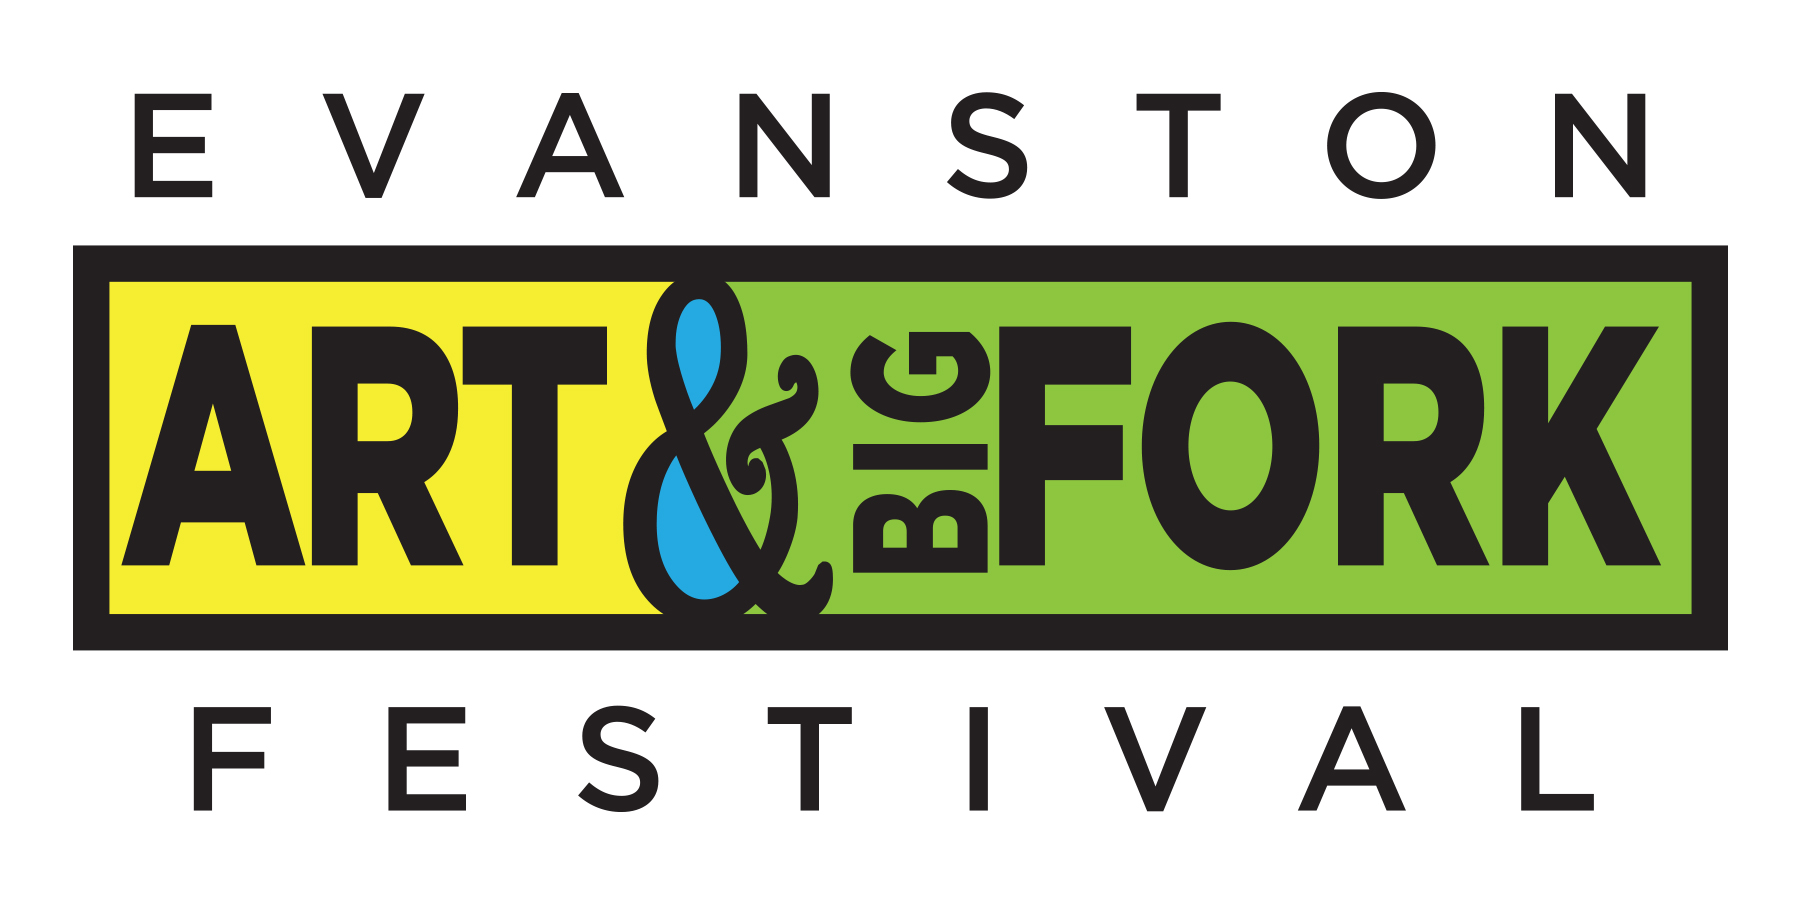 Evanston Art and Big Fork Festival